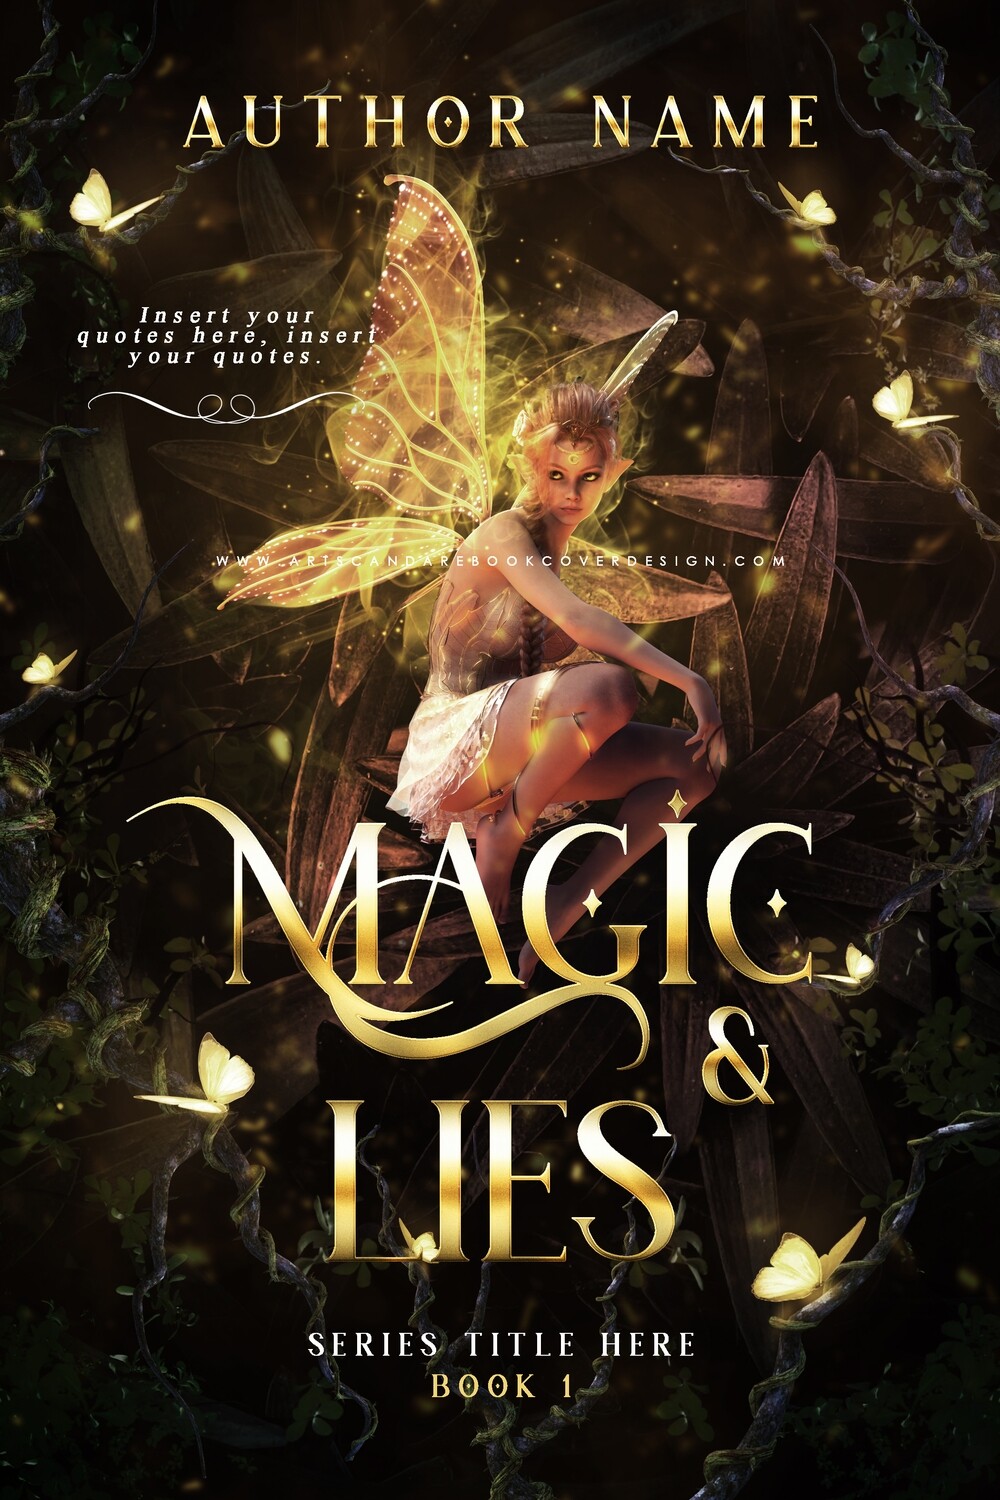 Ebook: Magic & Lies TRILOGY